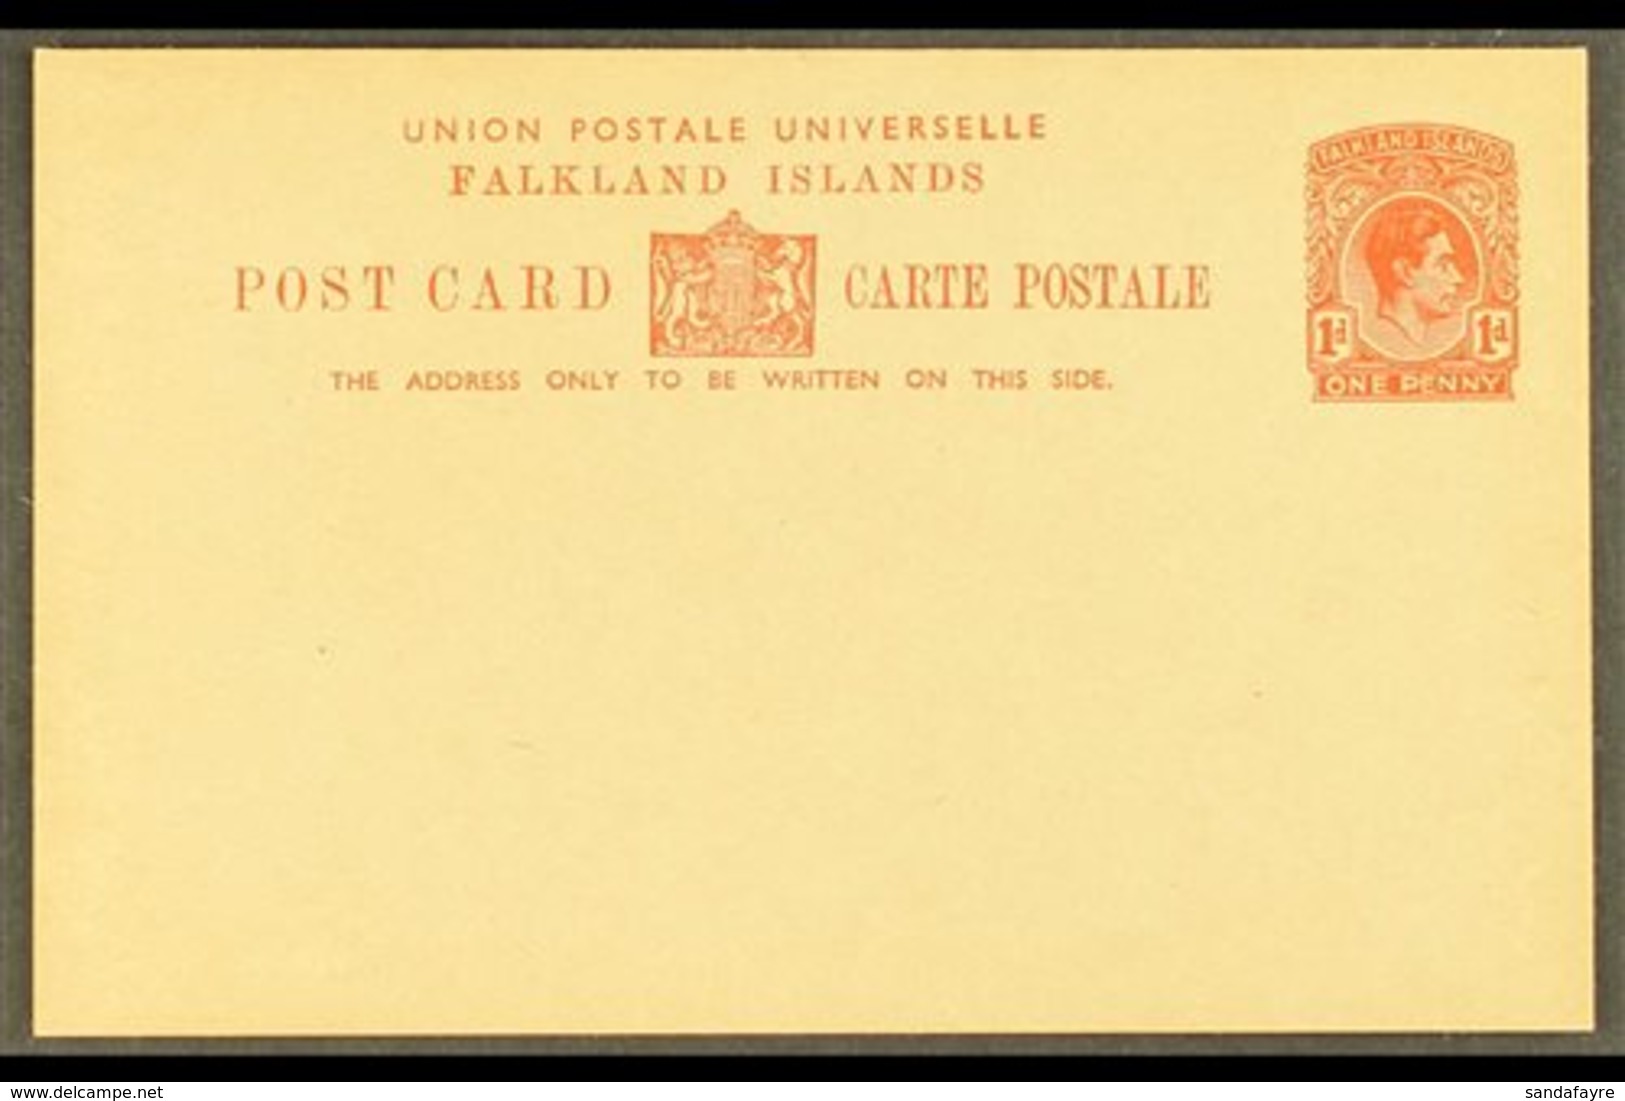 POSTAL STATIONERY 1938 1d Red-brown Postal Card (H&G 5 Or Heijtz P5) Very Fine Unused. Scarce, Only 444 Sold. For More I - Falklandeilanden